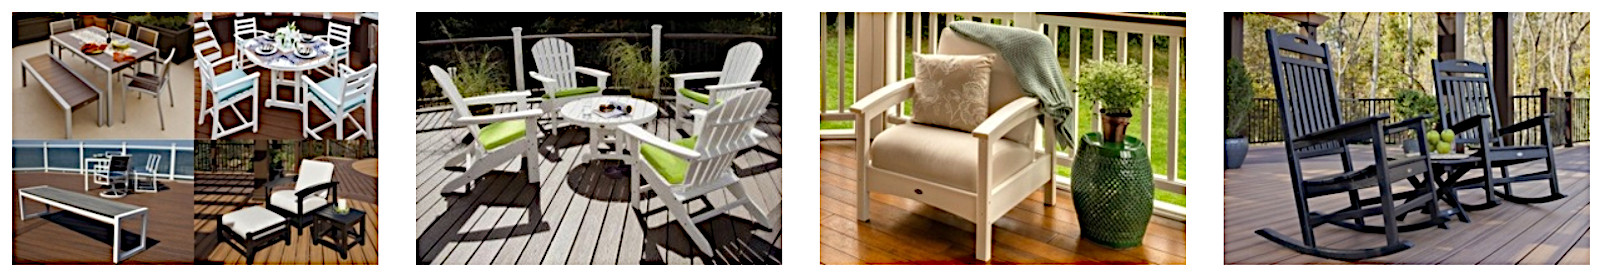 Cut-price Trex outdoor furniture